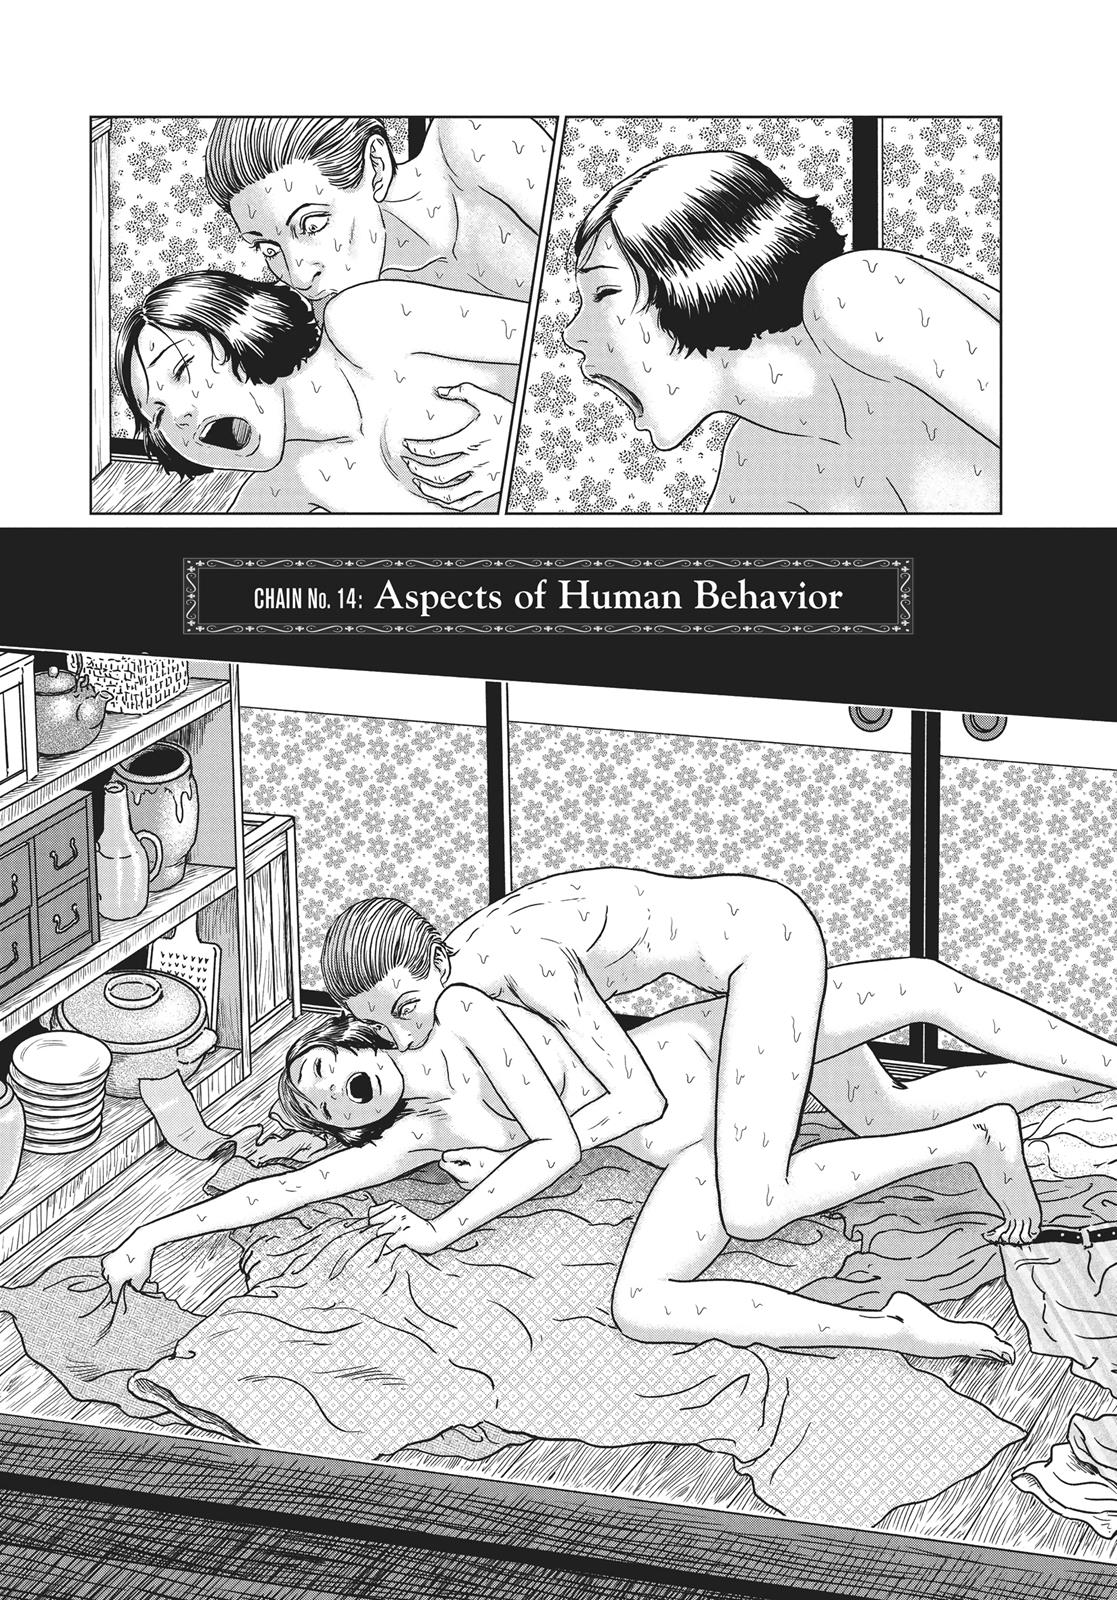 No Longer Human (Junji Itou) - Page 1